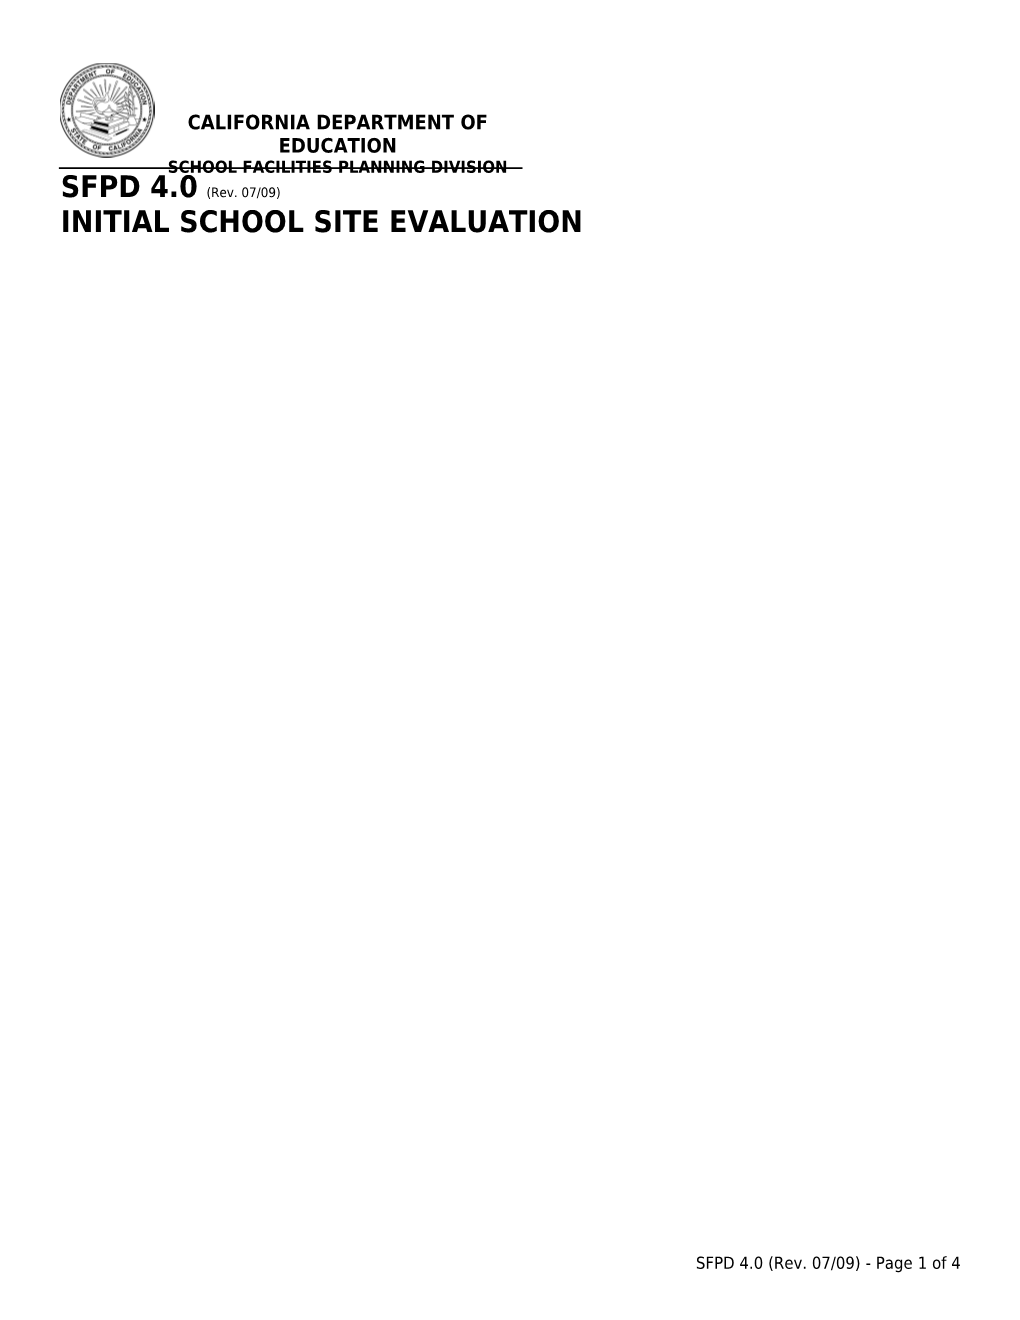 SFPD 4.0 Initial School Site Evaluation - School Facility (CA Dept of Education)